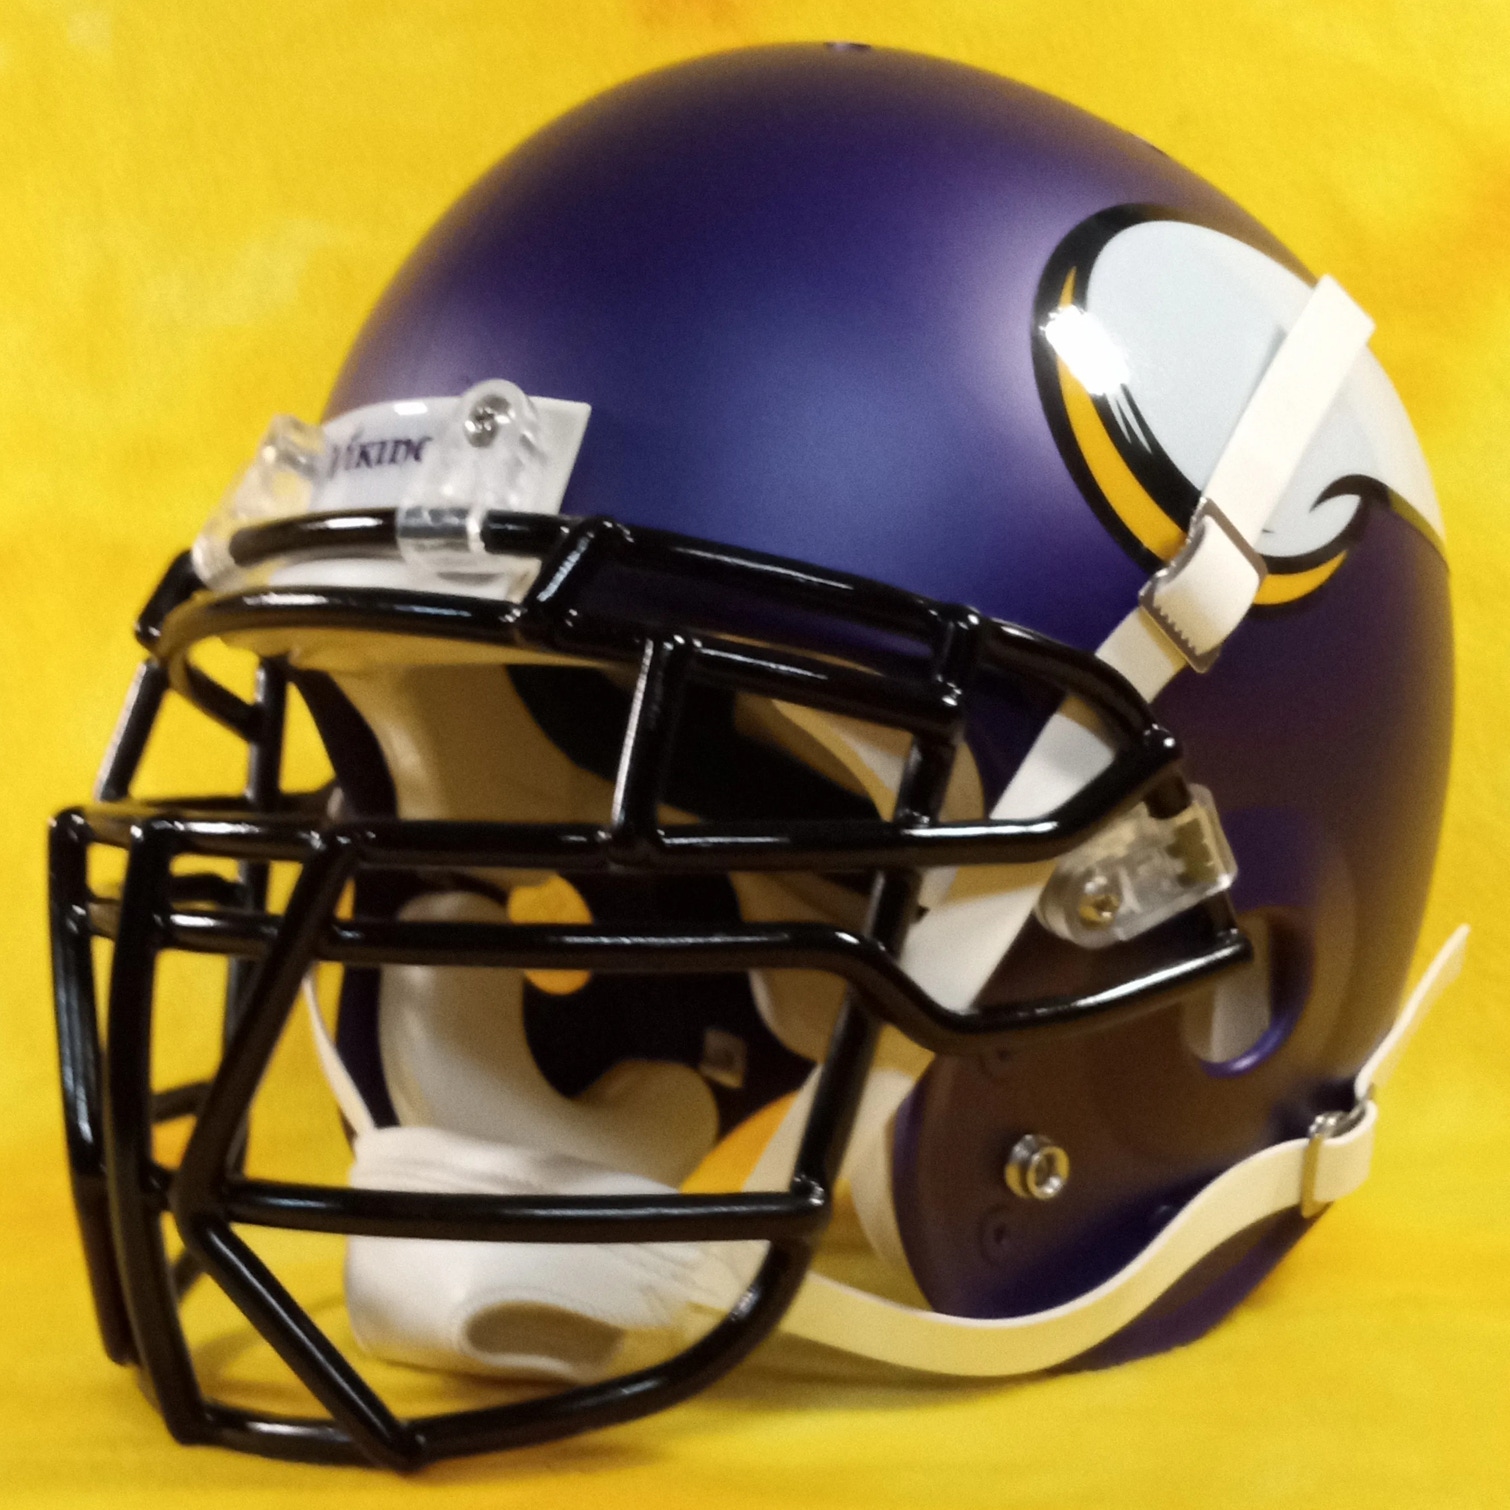 Minnesota Vikings super custom fullsize football helmet Schutt Air Advantage lg